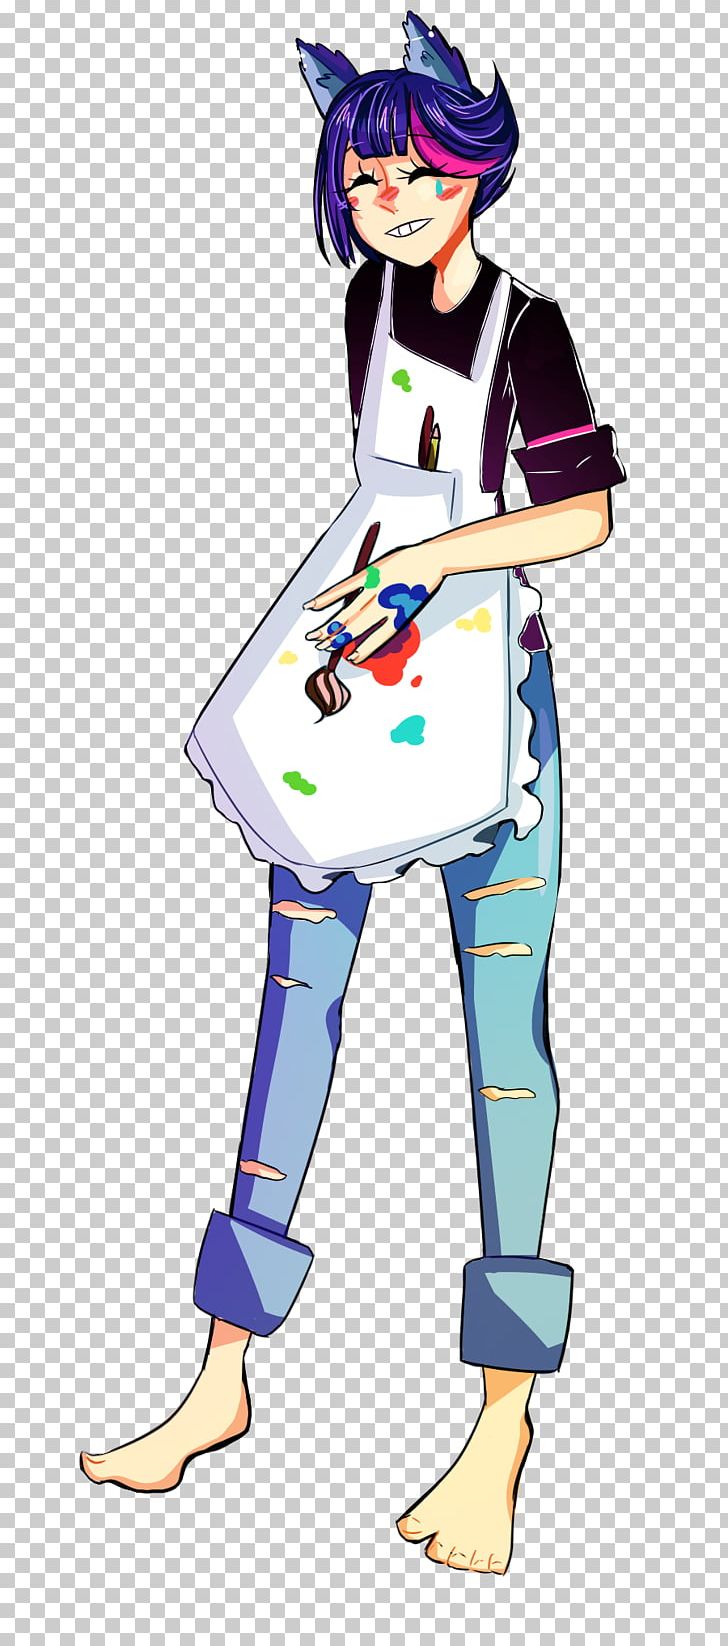 Hatsune Miku Vocaloid PNG, Clipart, Art, Blog, Boy, Cartoon, Clothing Free PNG Download